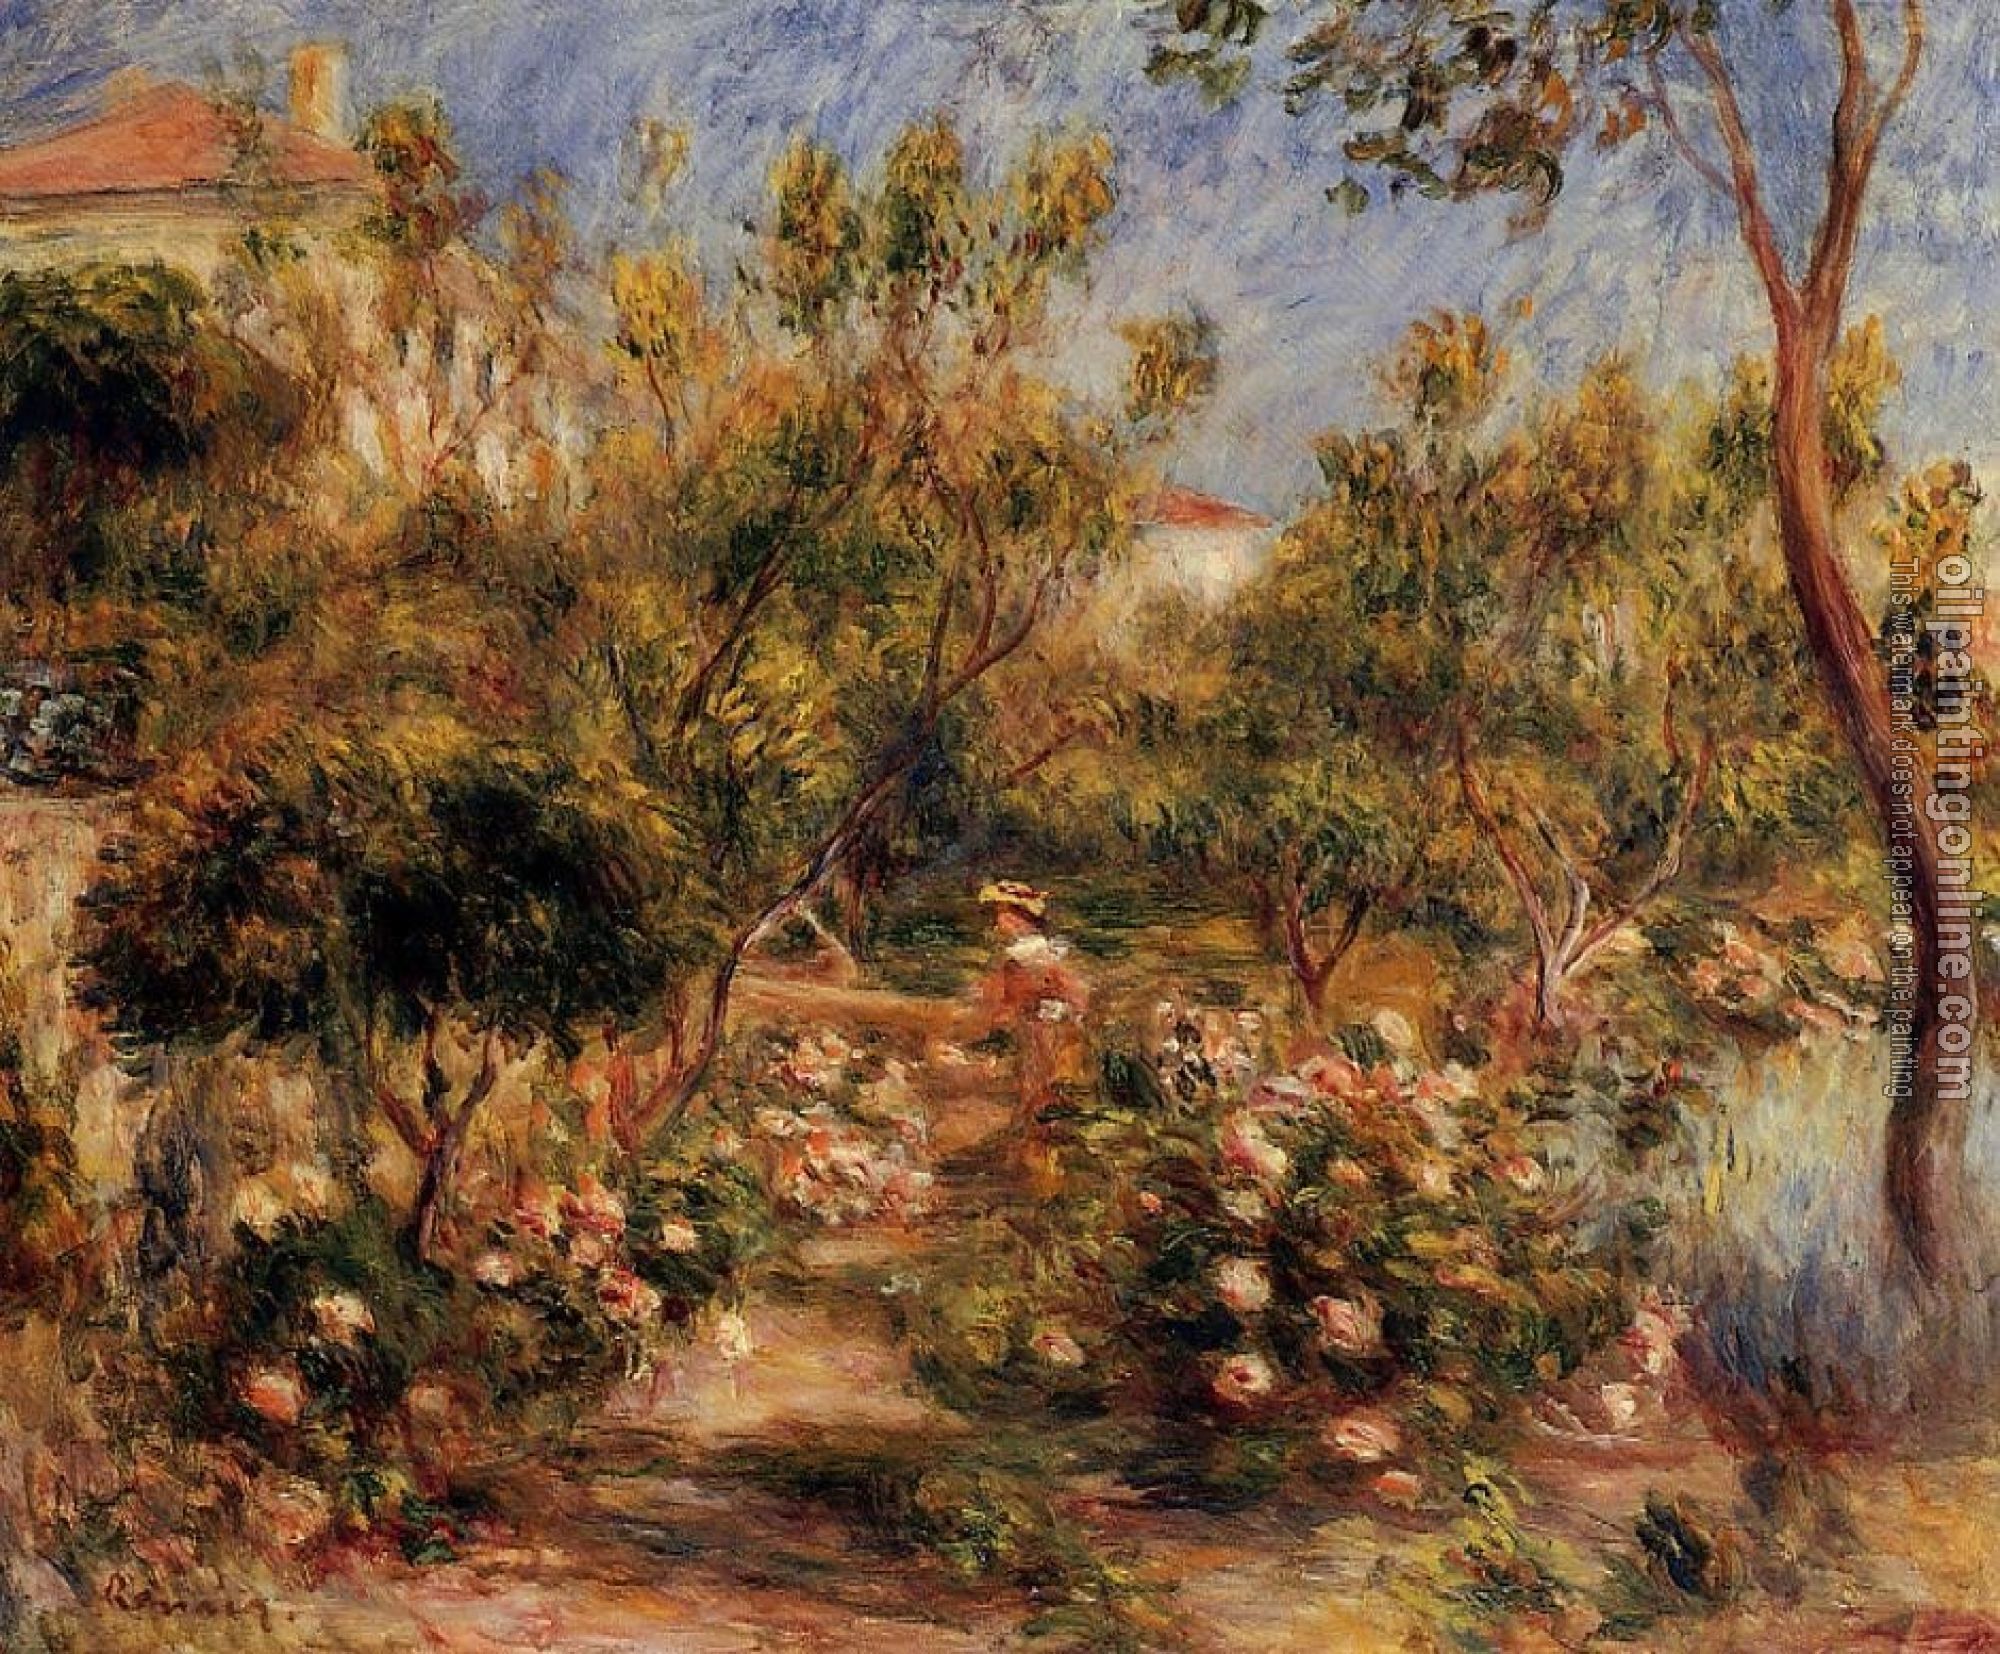 Renoir, Pierre Auguste - Young Woman in a Garden - Cagnes